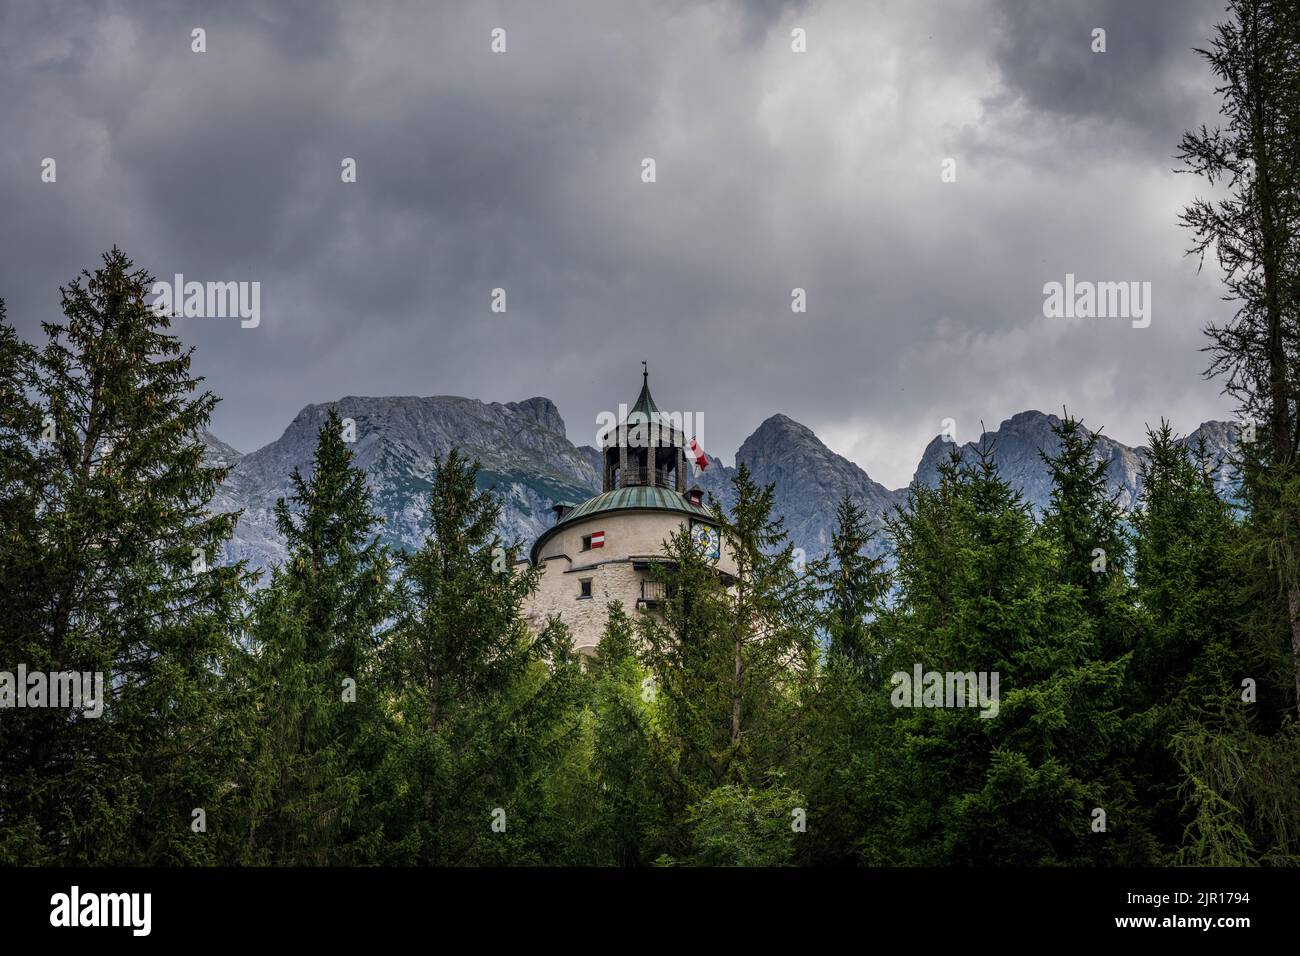 Hohenwerfen castle rises above the trees, near Werfen, Austria Stock Photo